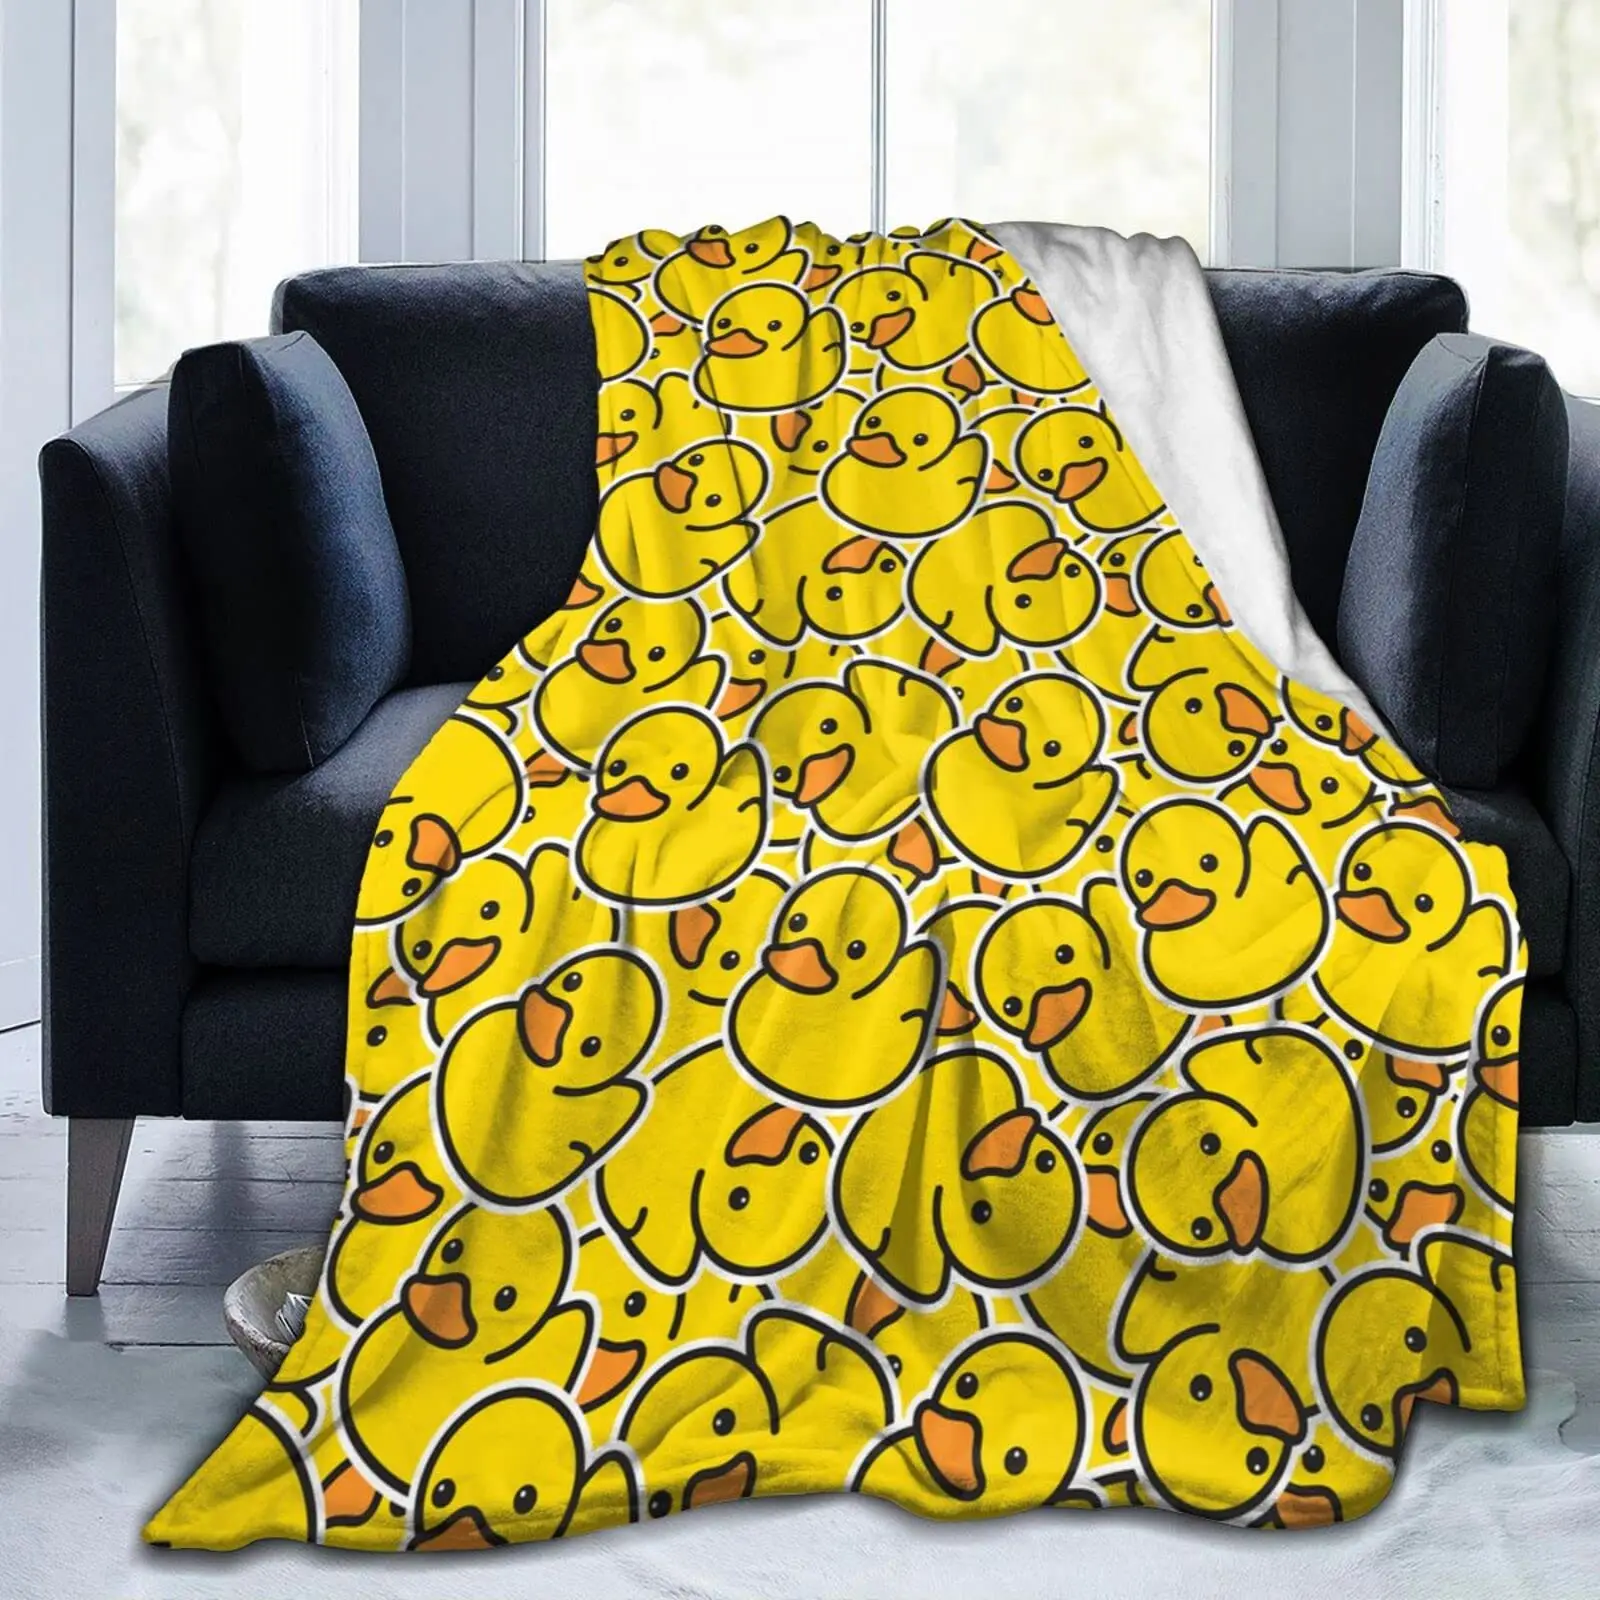 

Cute Rubber Duck Throw Blanket Soft Warm All Season Yellow Cartoon Ducks Flannel Blankets for Bed Car Sofa Couch Bedroom Decor